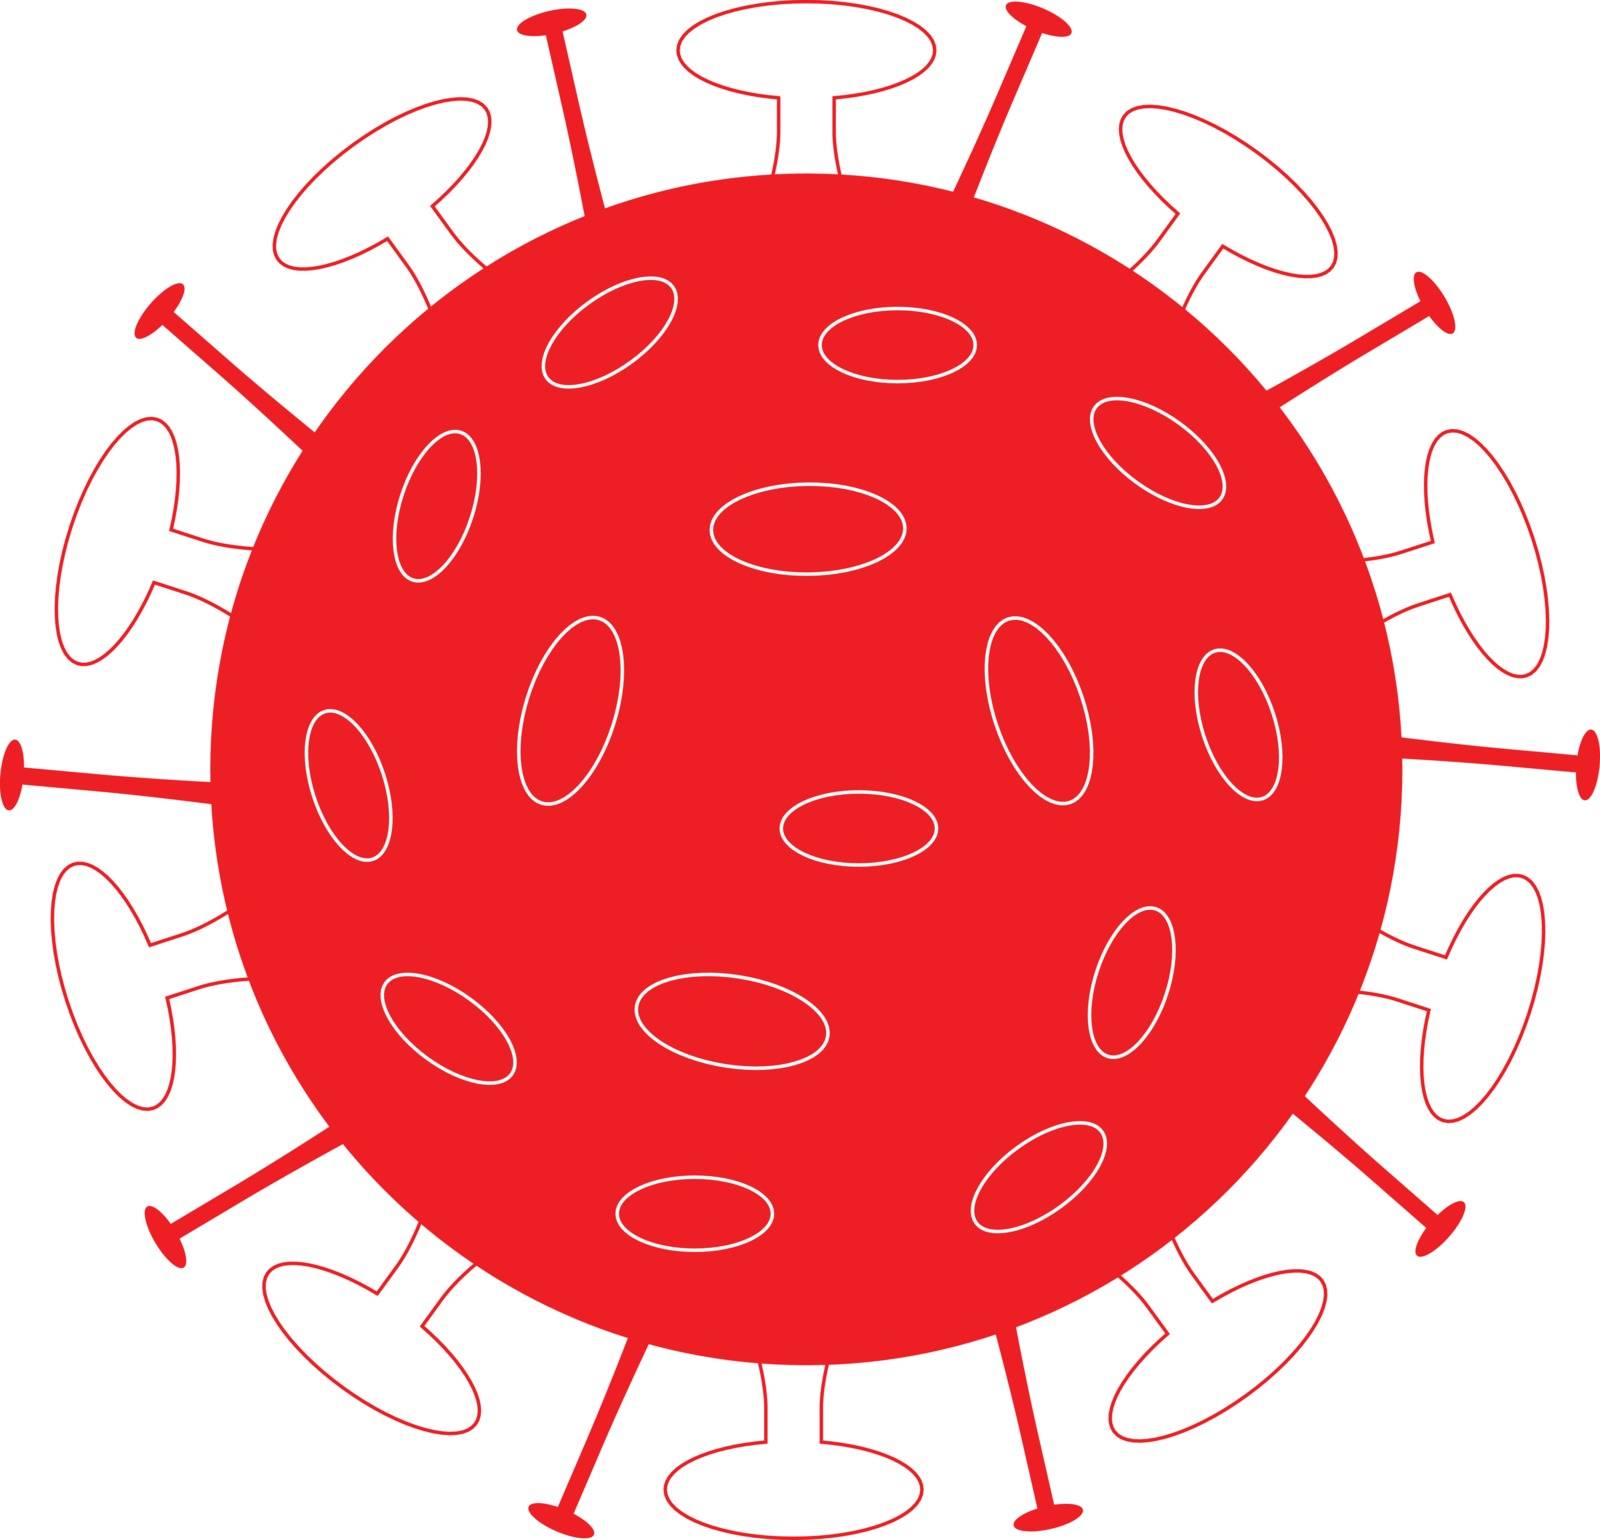 icon of coronavirus in red and white